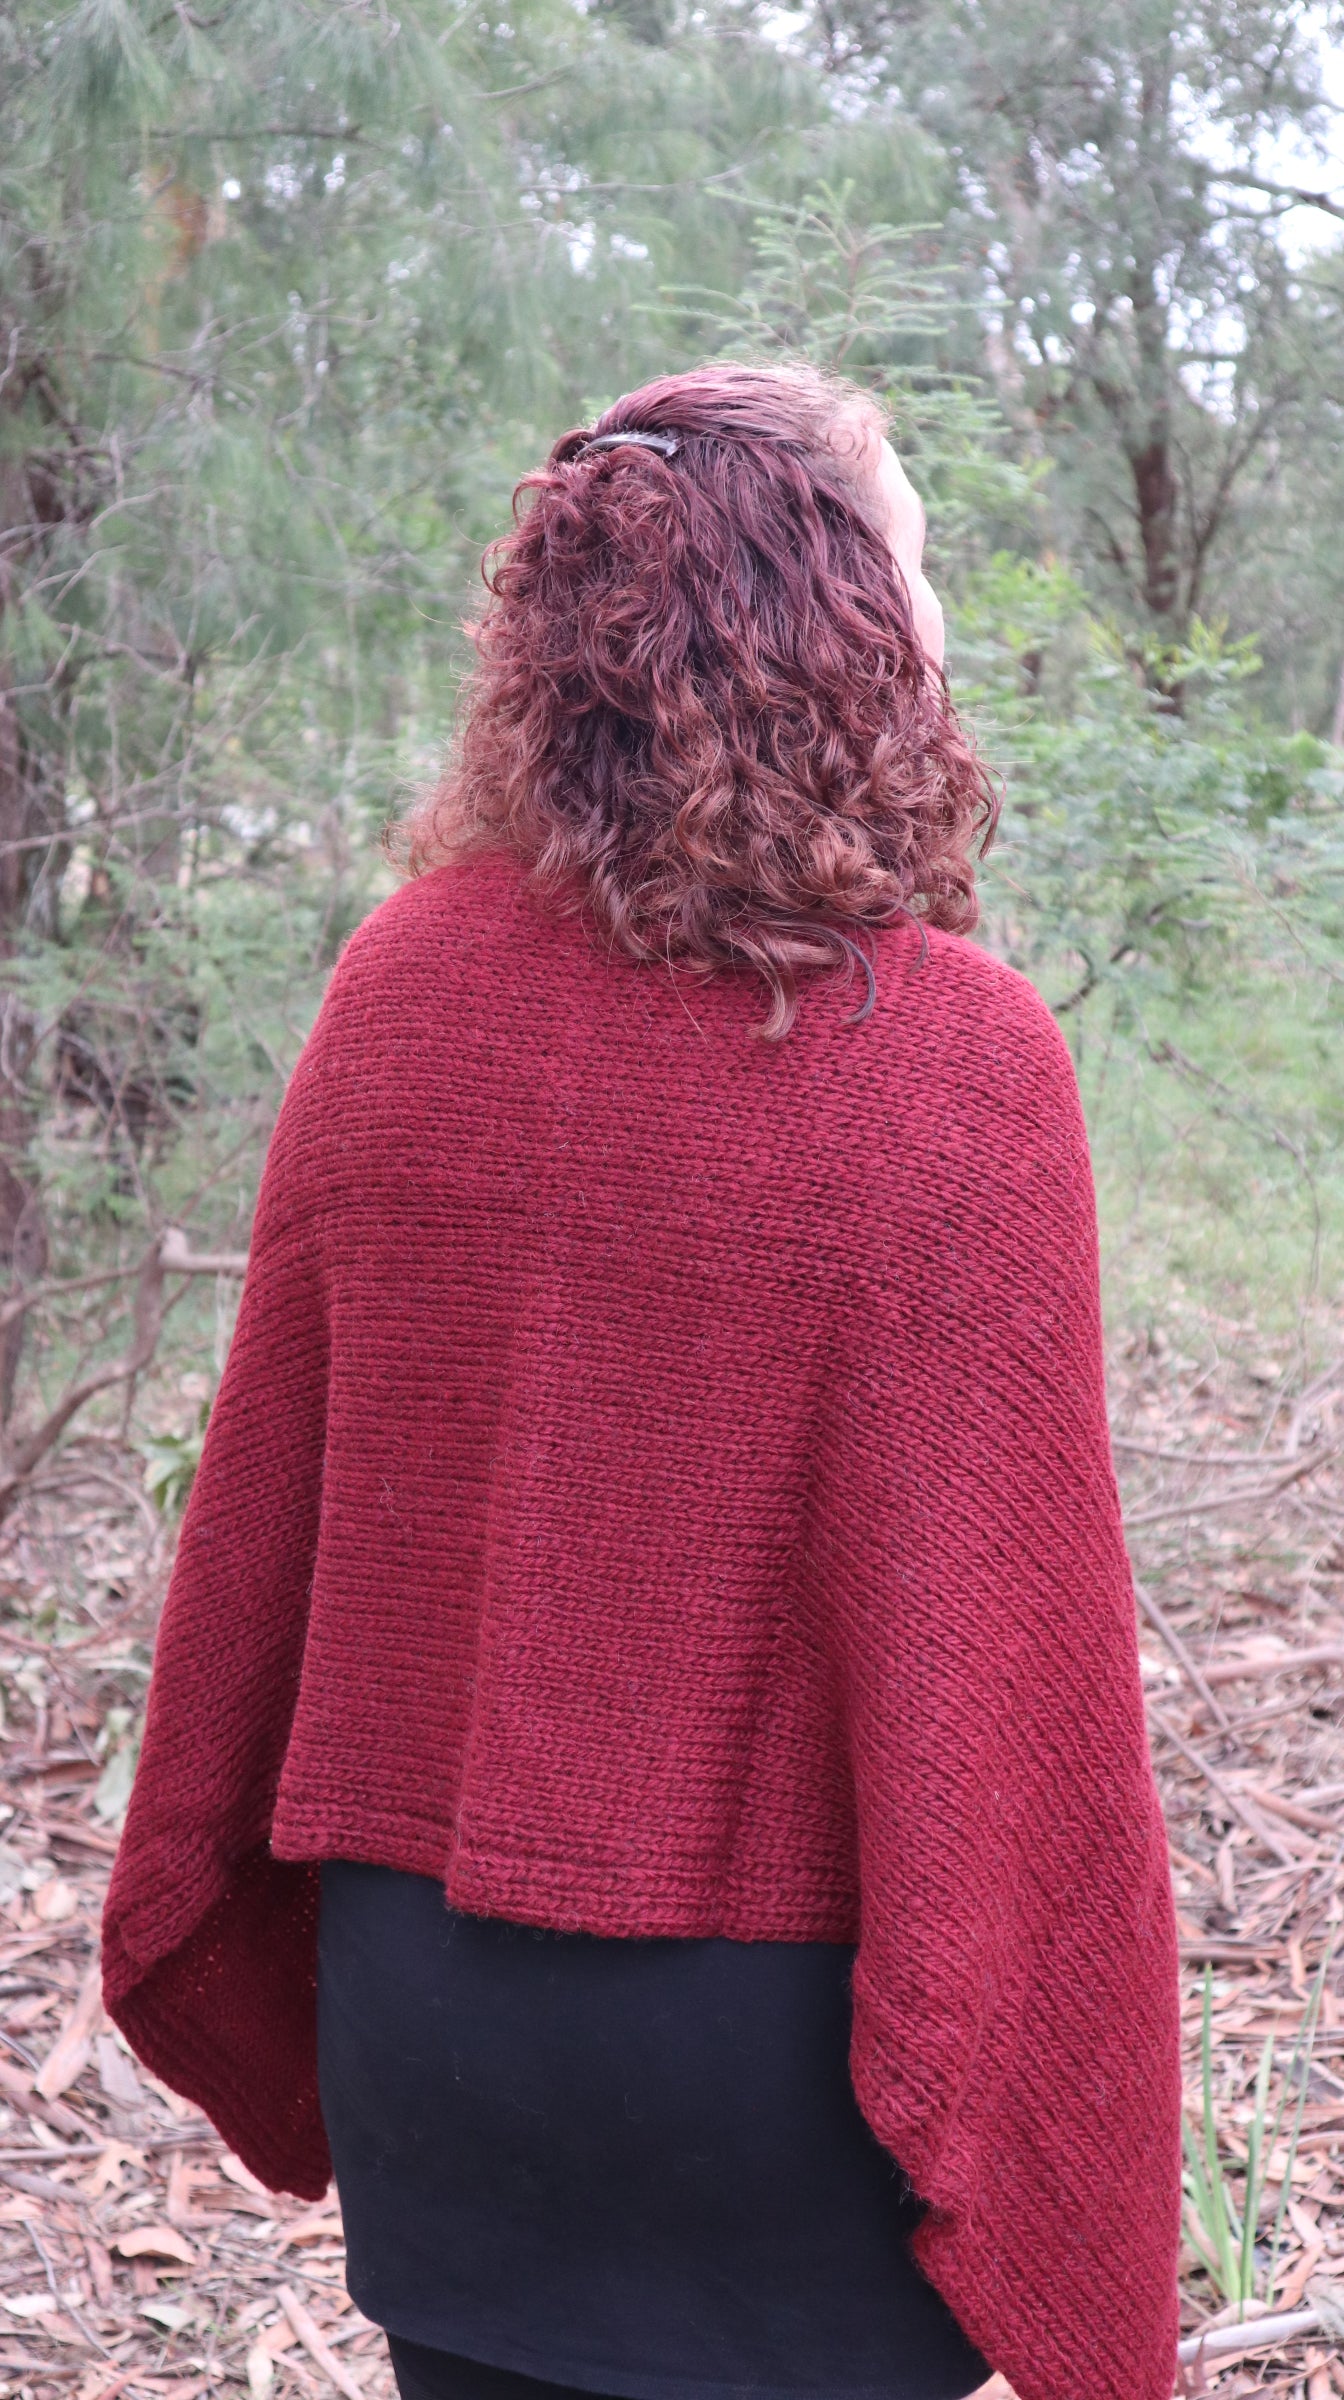 Fair Trade Ethical Women's Woollen Poncho